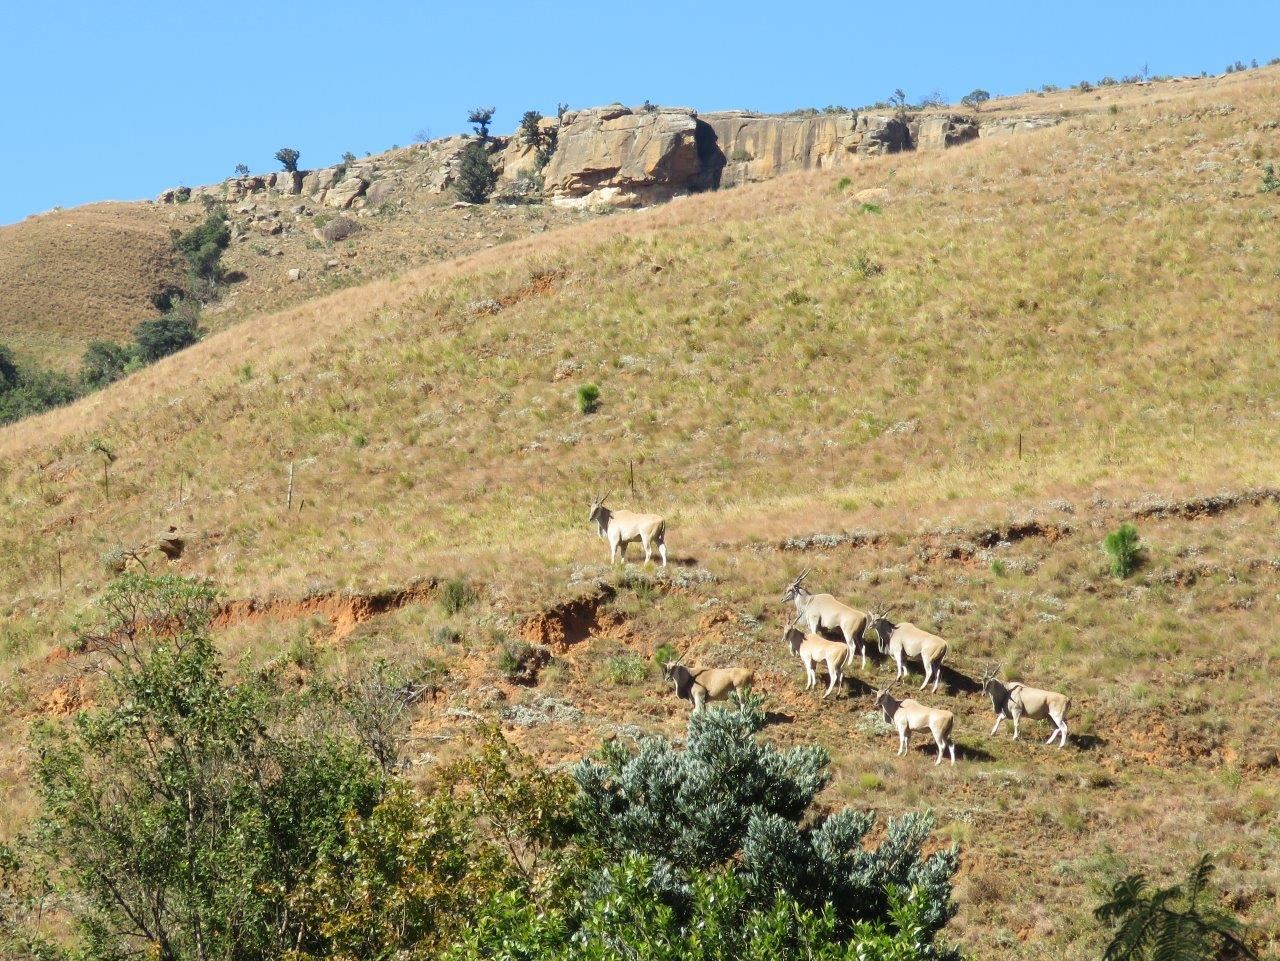 Eland herd